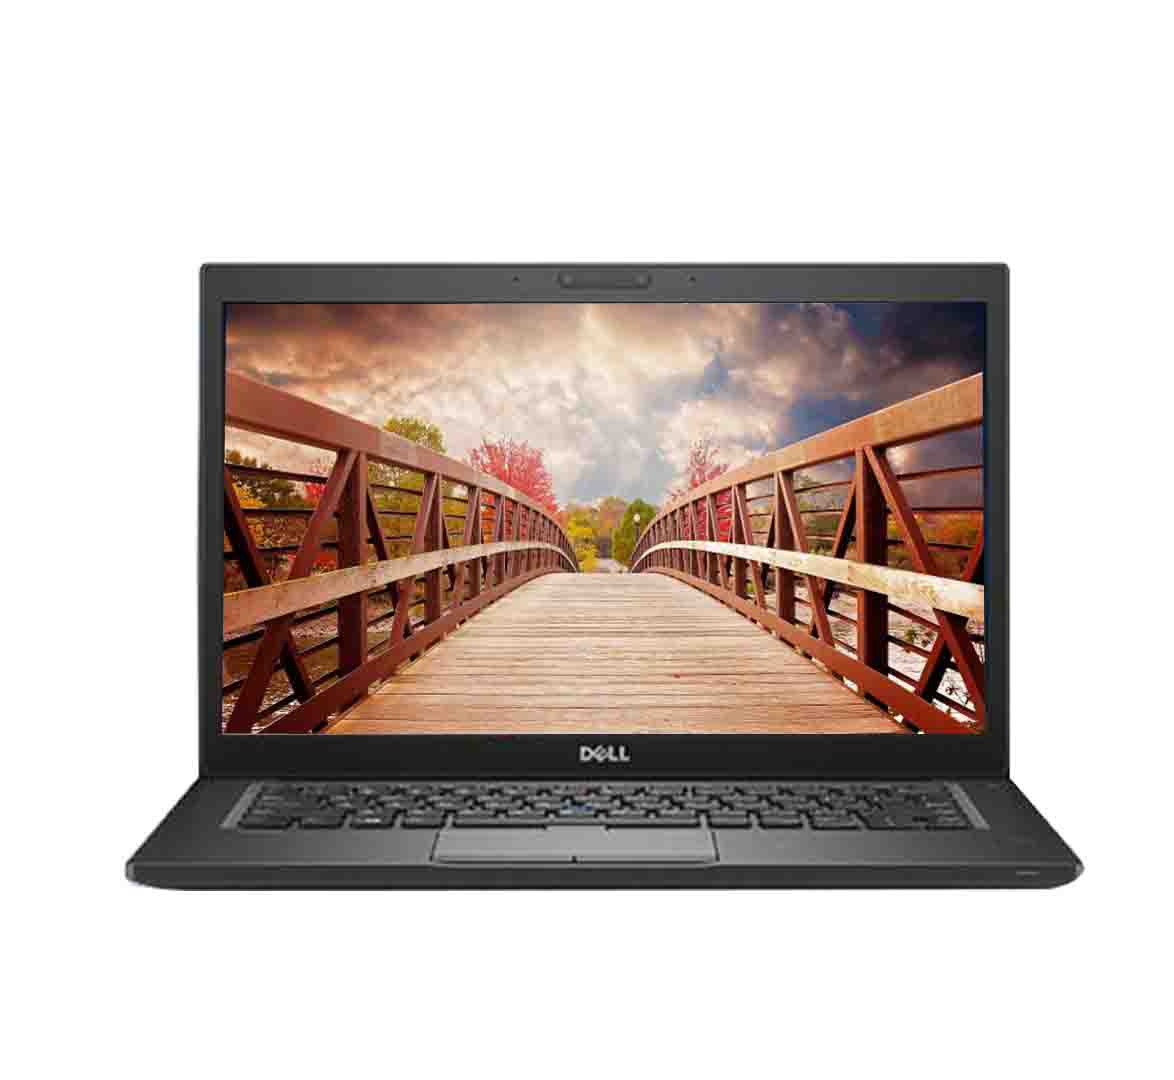 Dell Latitude 7480 Business Laptop, Intel Core i7-7th Generation CPU, 8GB RAM, 256GB SSD, 14.1 inch Touchscreen, Win 10 Pro